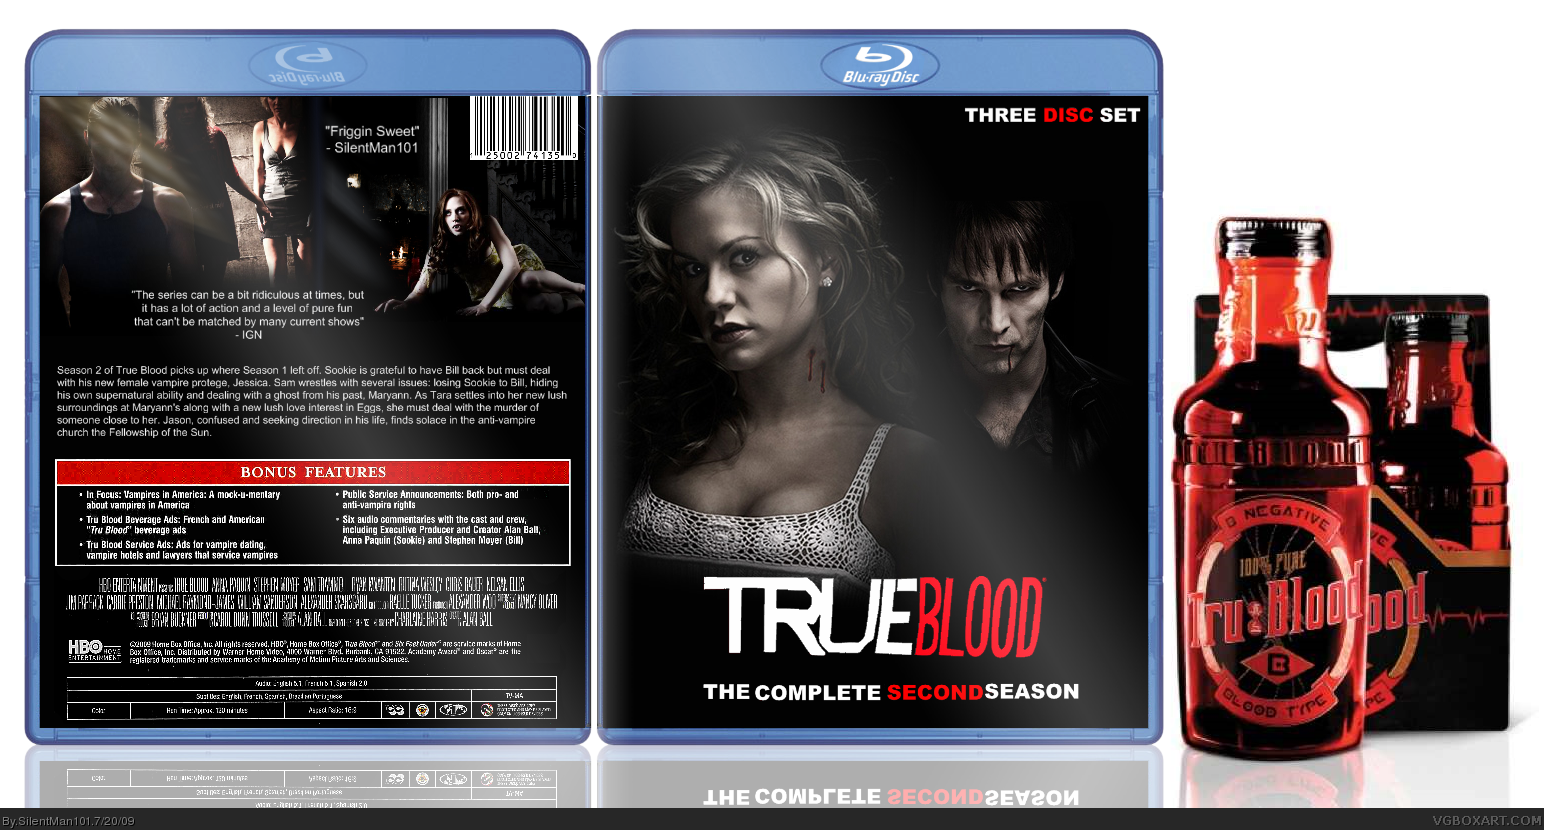 True Blood: The Complete Second Season box cover